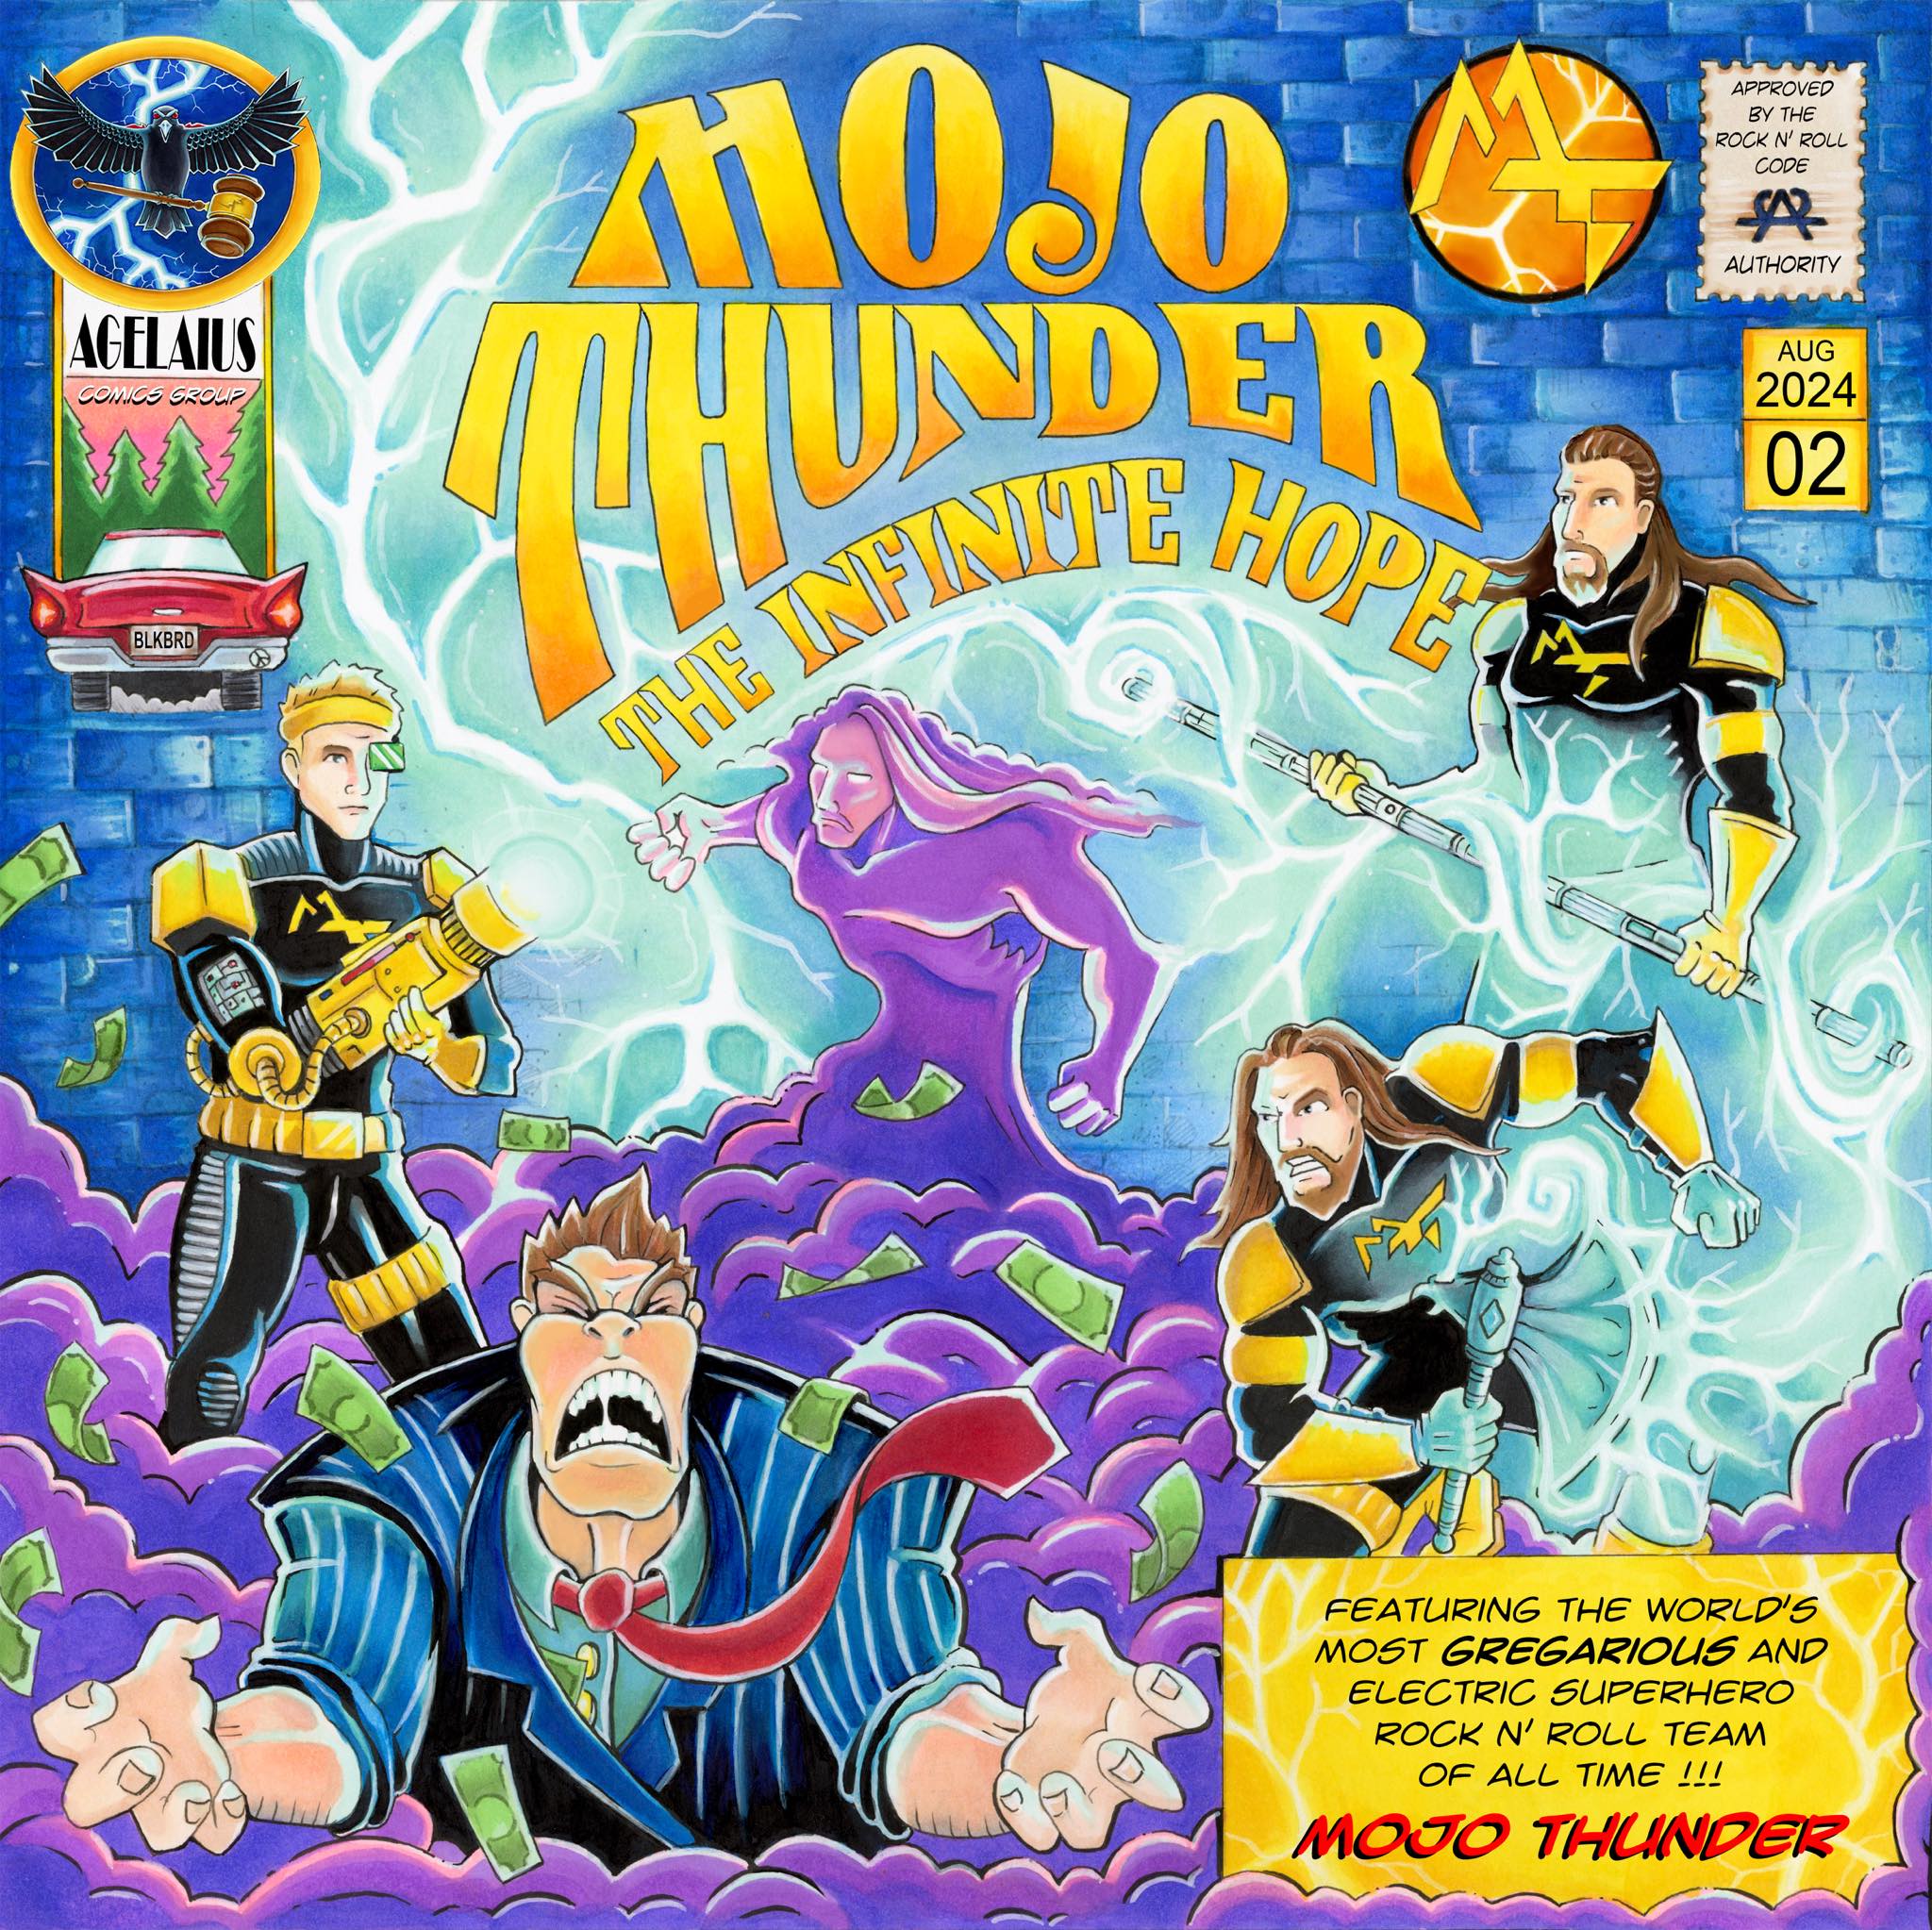 Mojo Thunder - The Infinite Hope